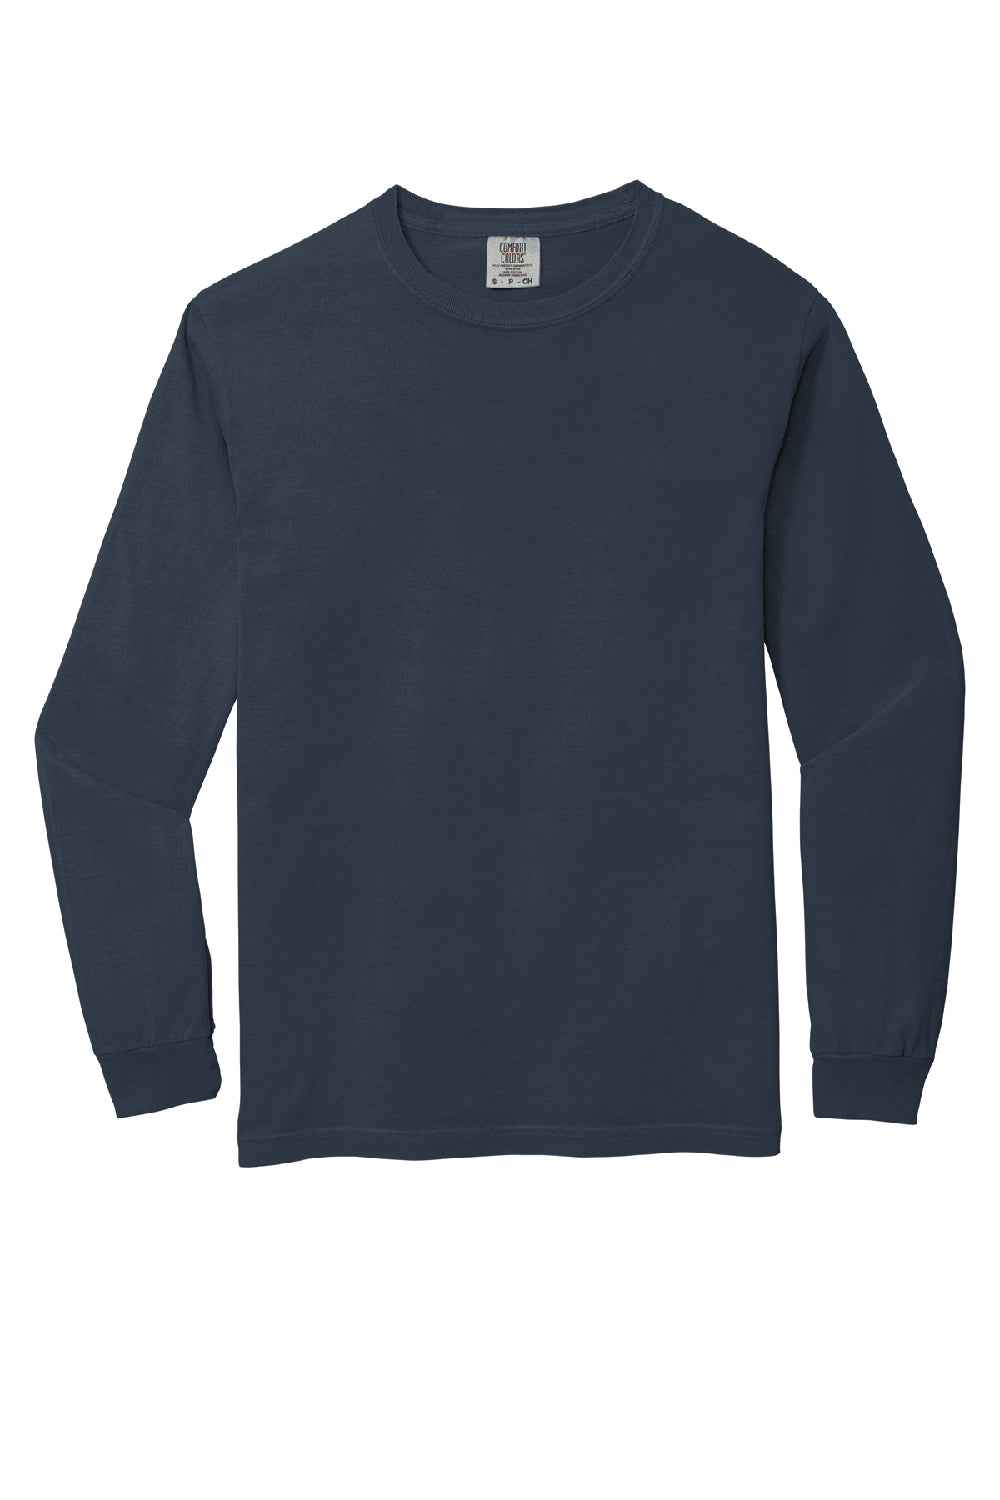 Comfort Colors 6014/C6014 Mens Long Sleeve Crewneck T-Shirt Midnight Navy Blue Flat Front